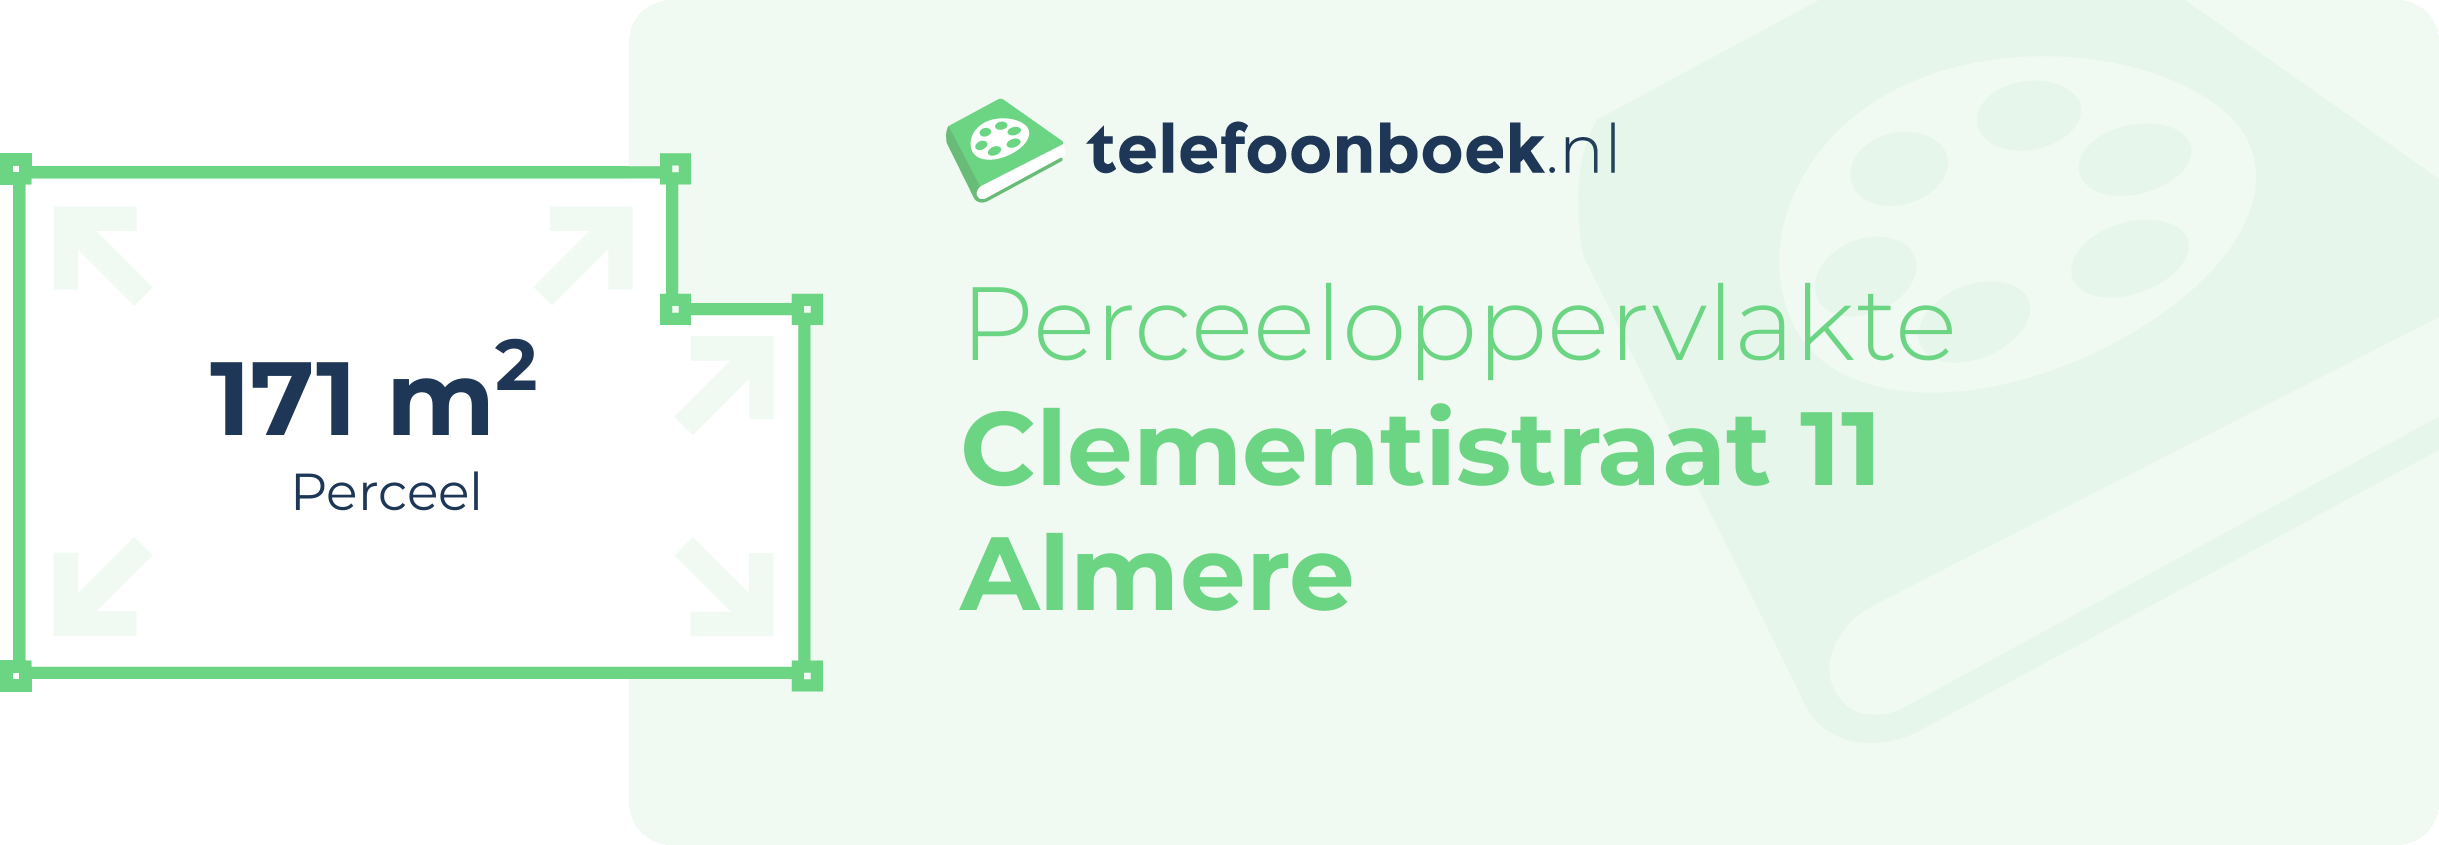 Perceeloppervlakte Clementistraat 11 Almere